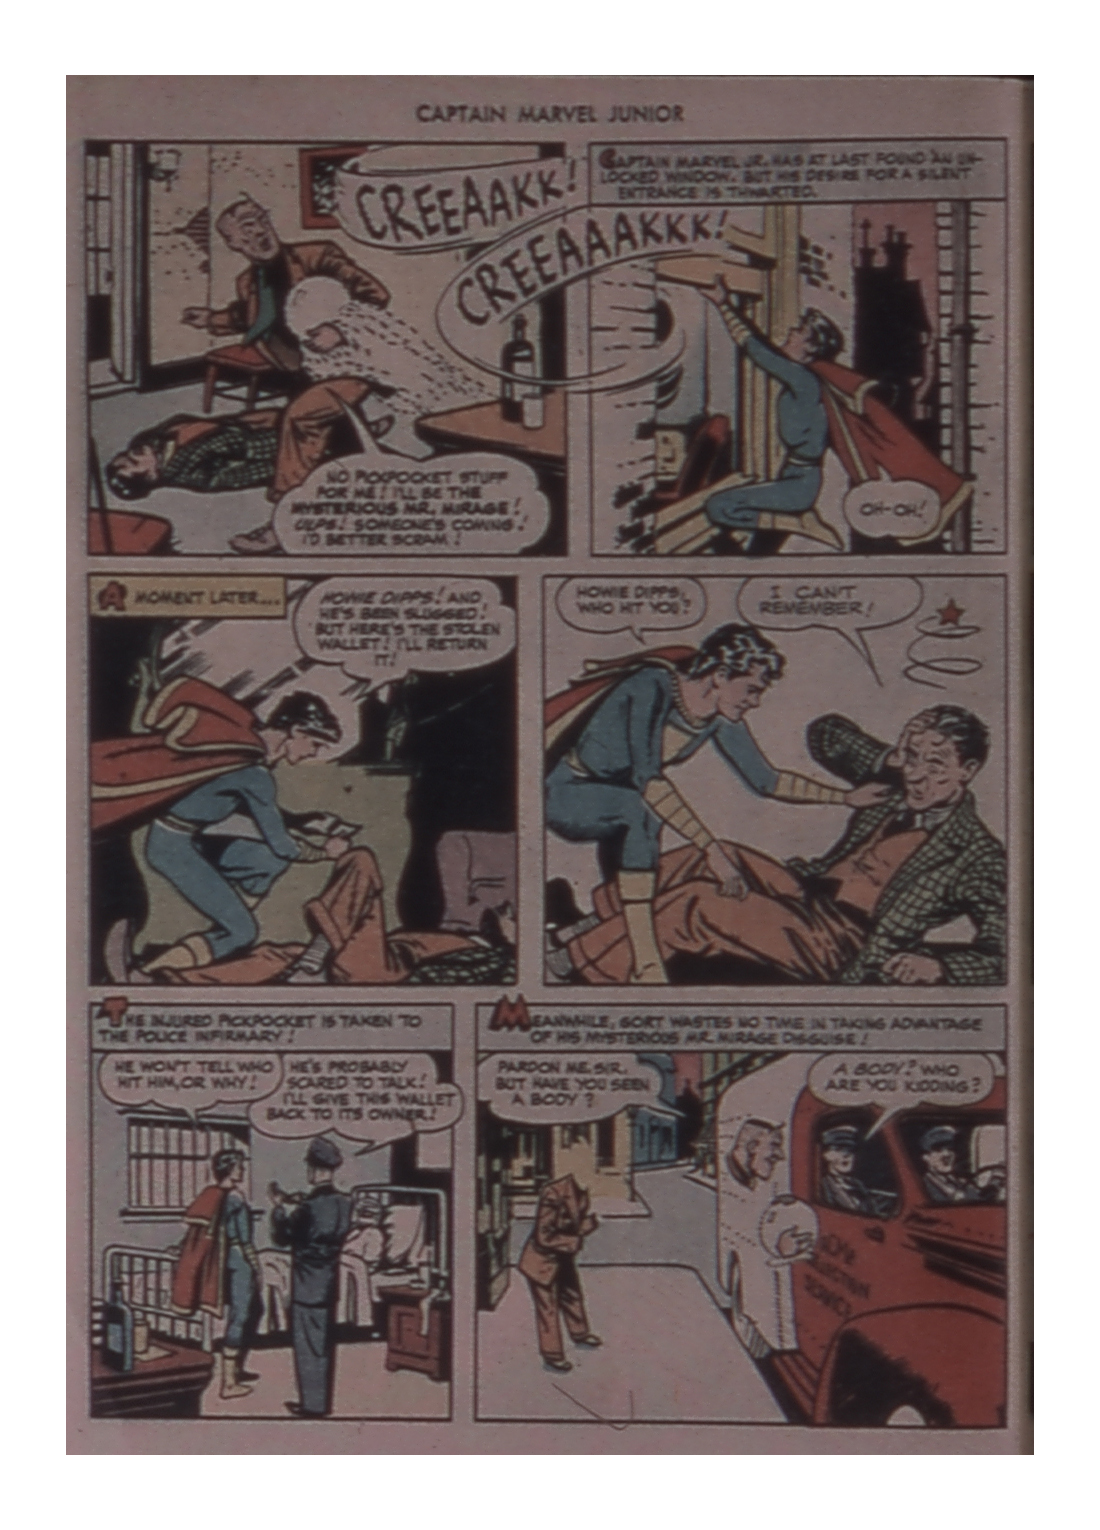 Read online Captain Marvel, Jr. comic -  Issue #81 - 44